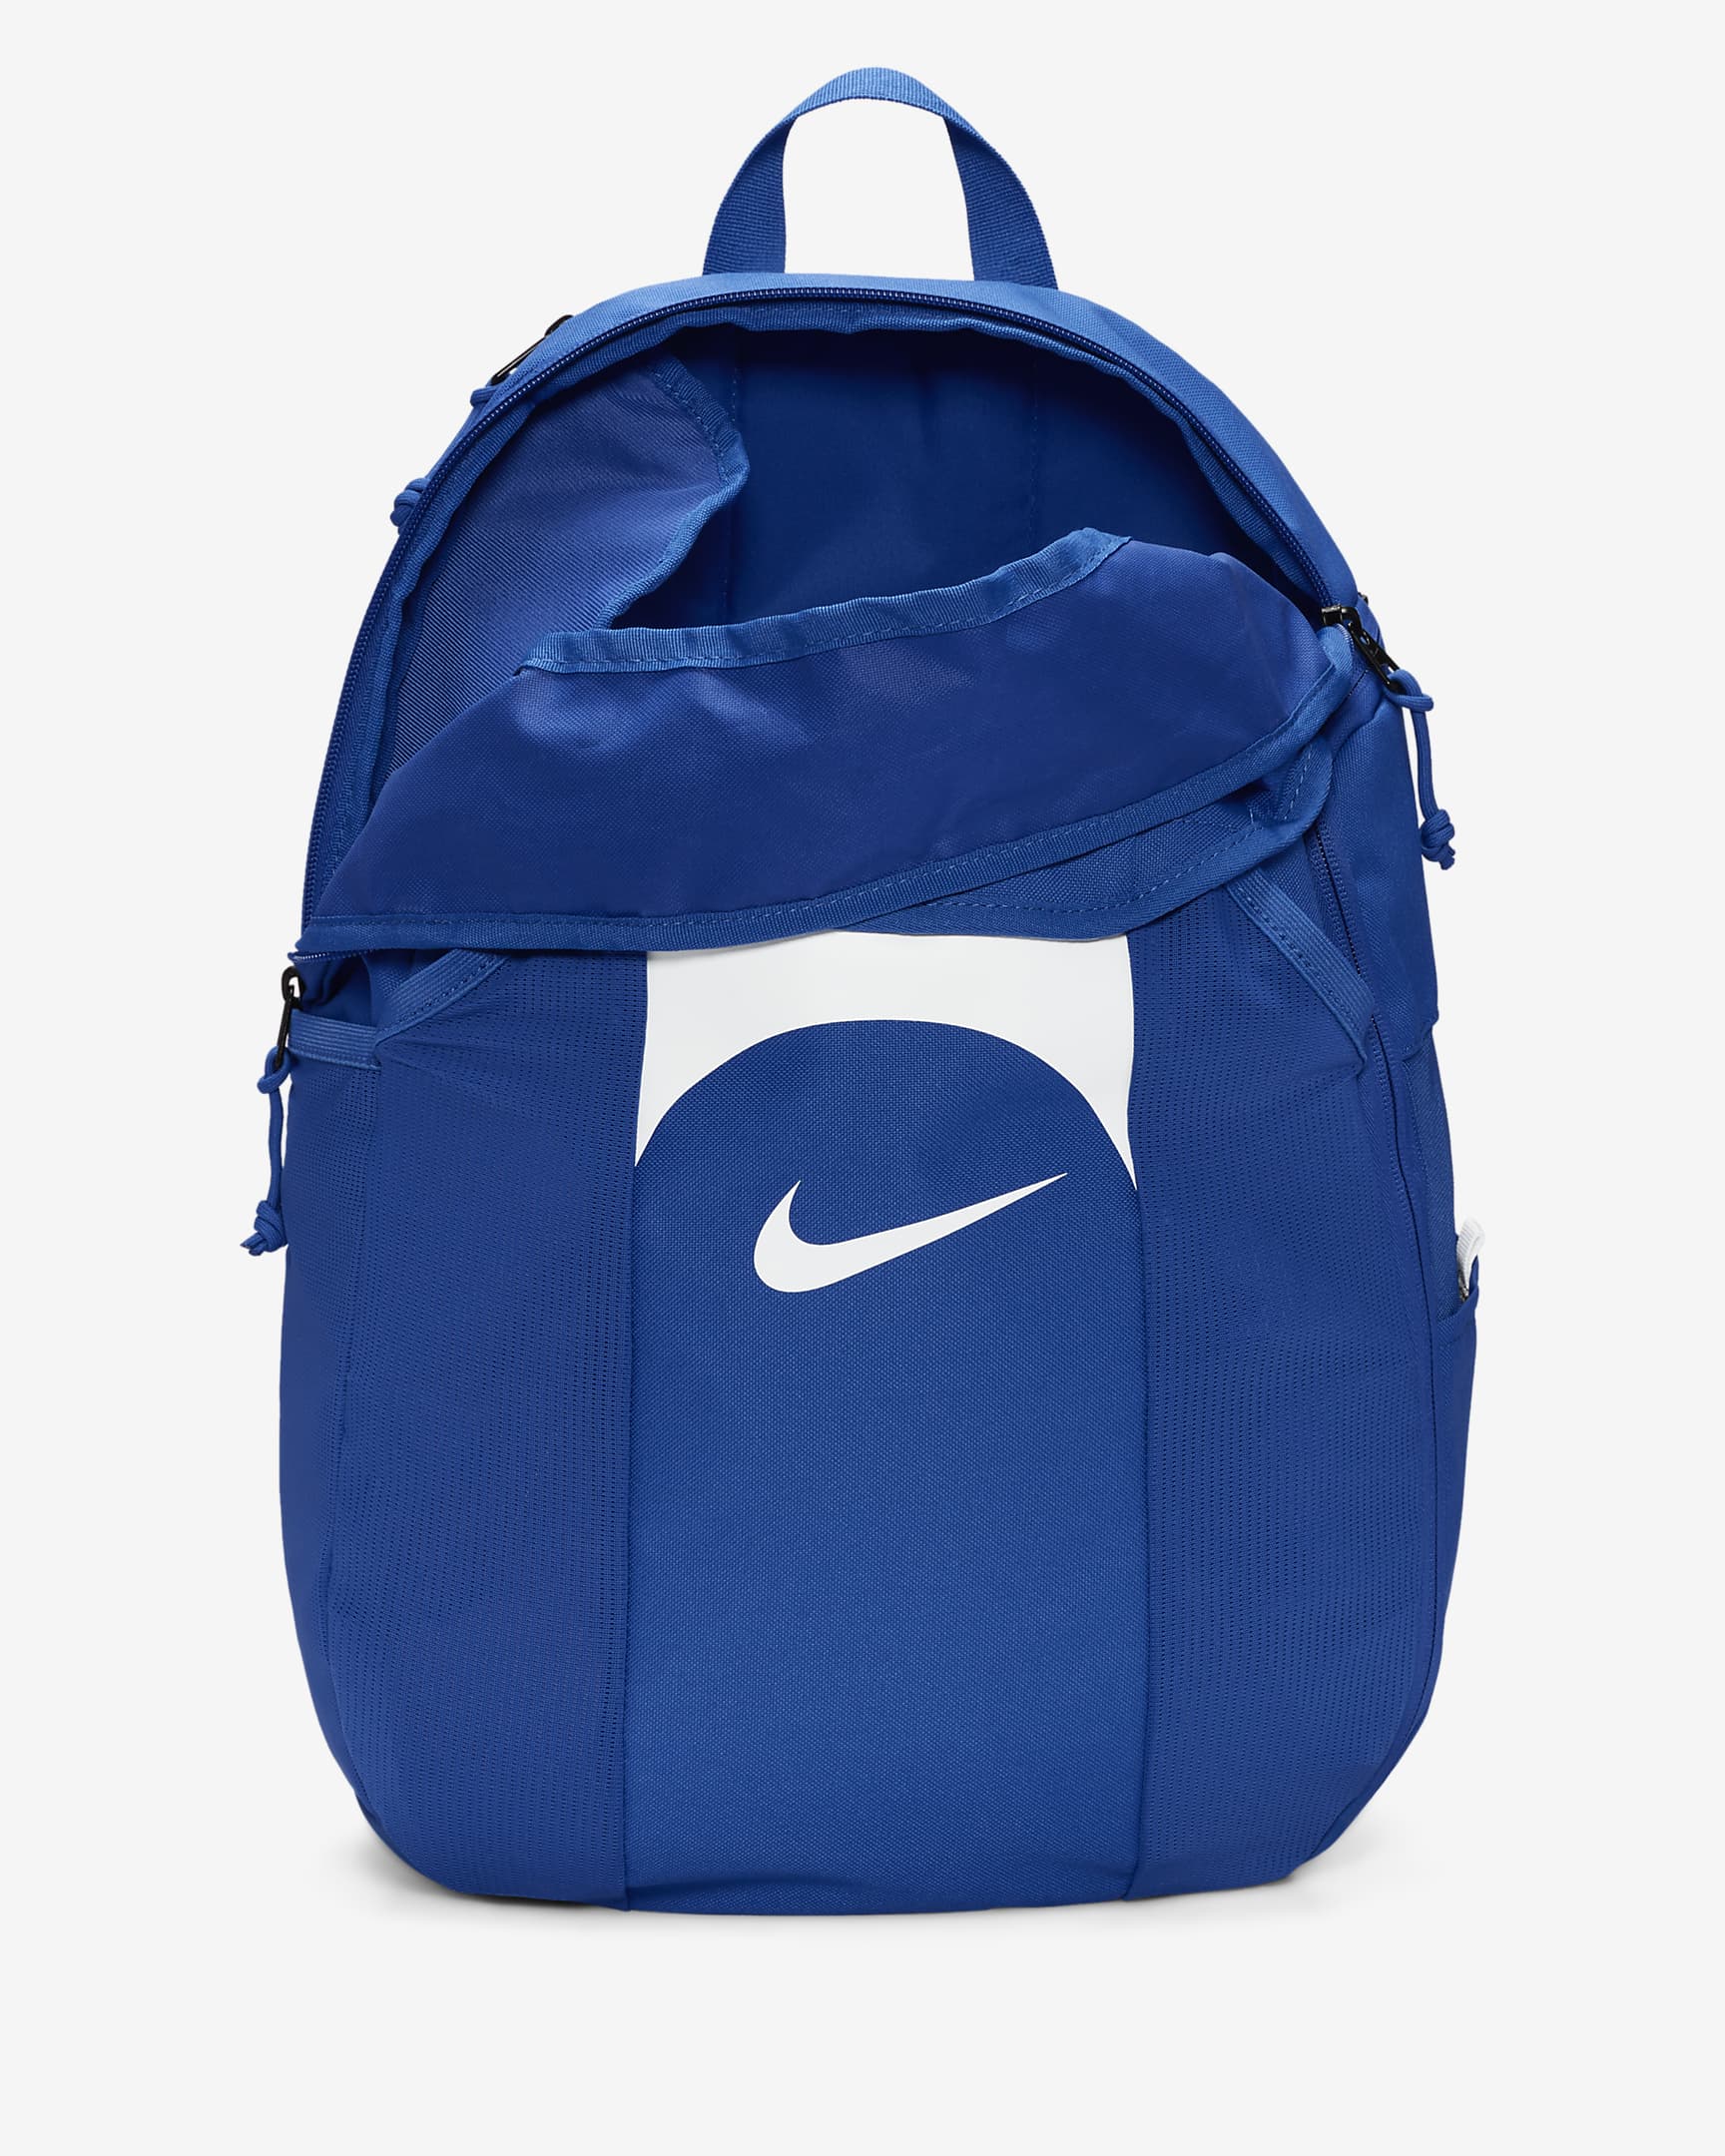 Nike Academy Team Backpack (30L) - Game Royal/Game Royal/White